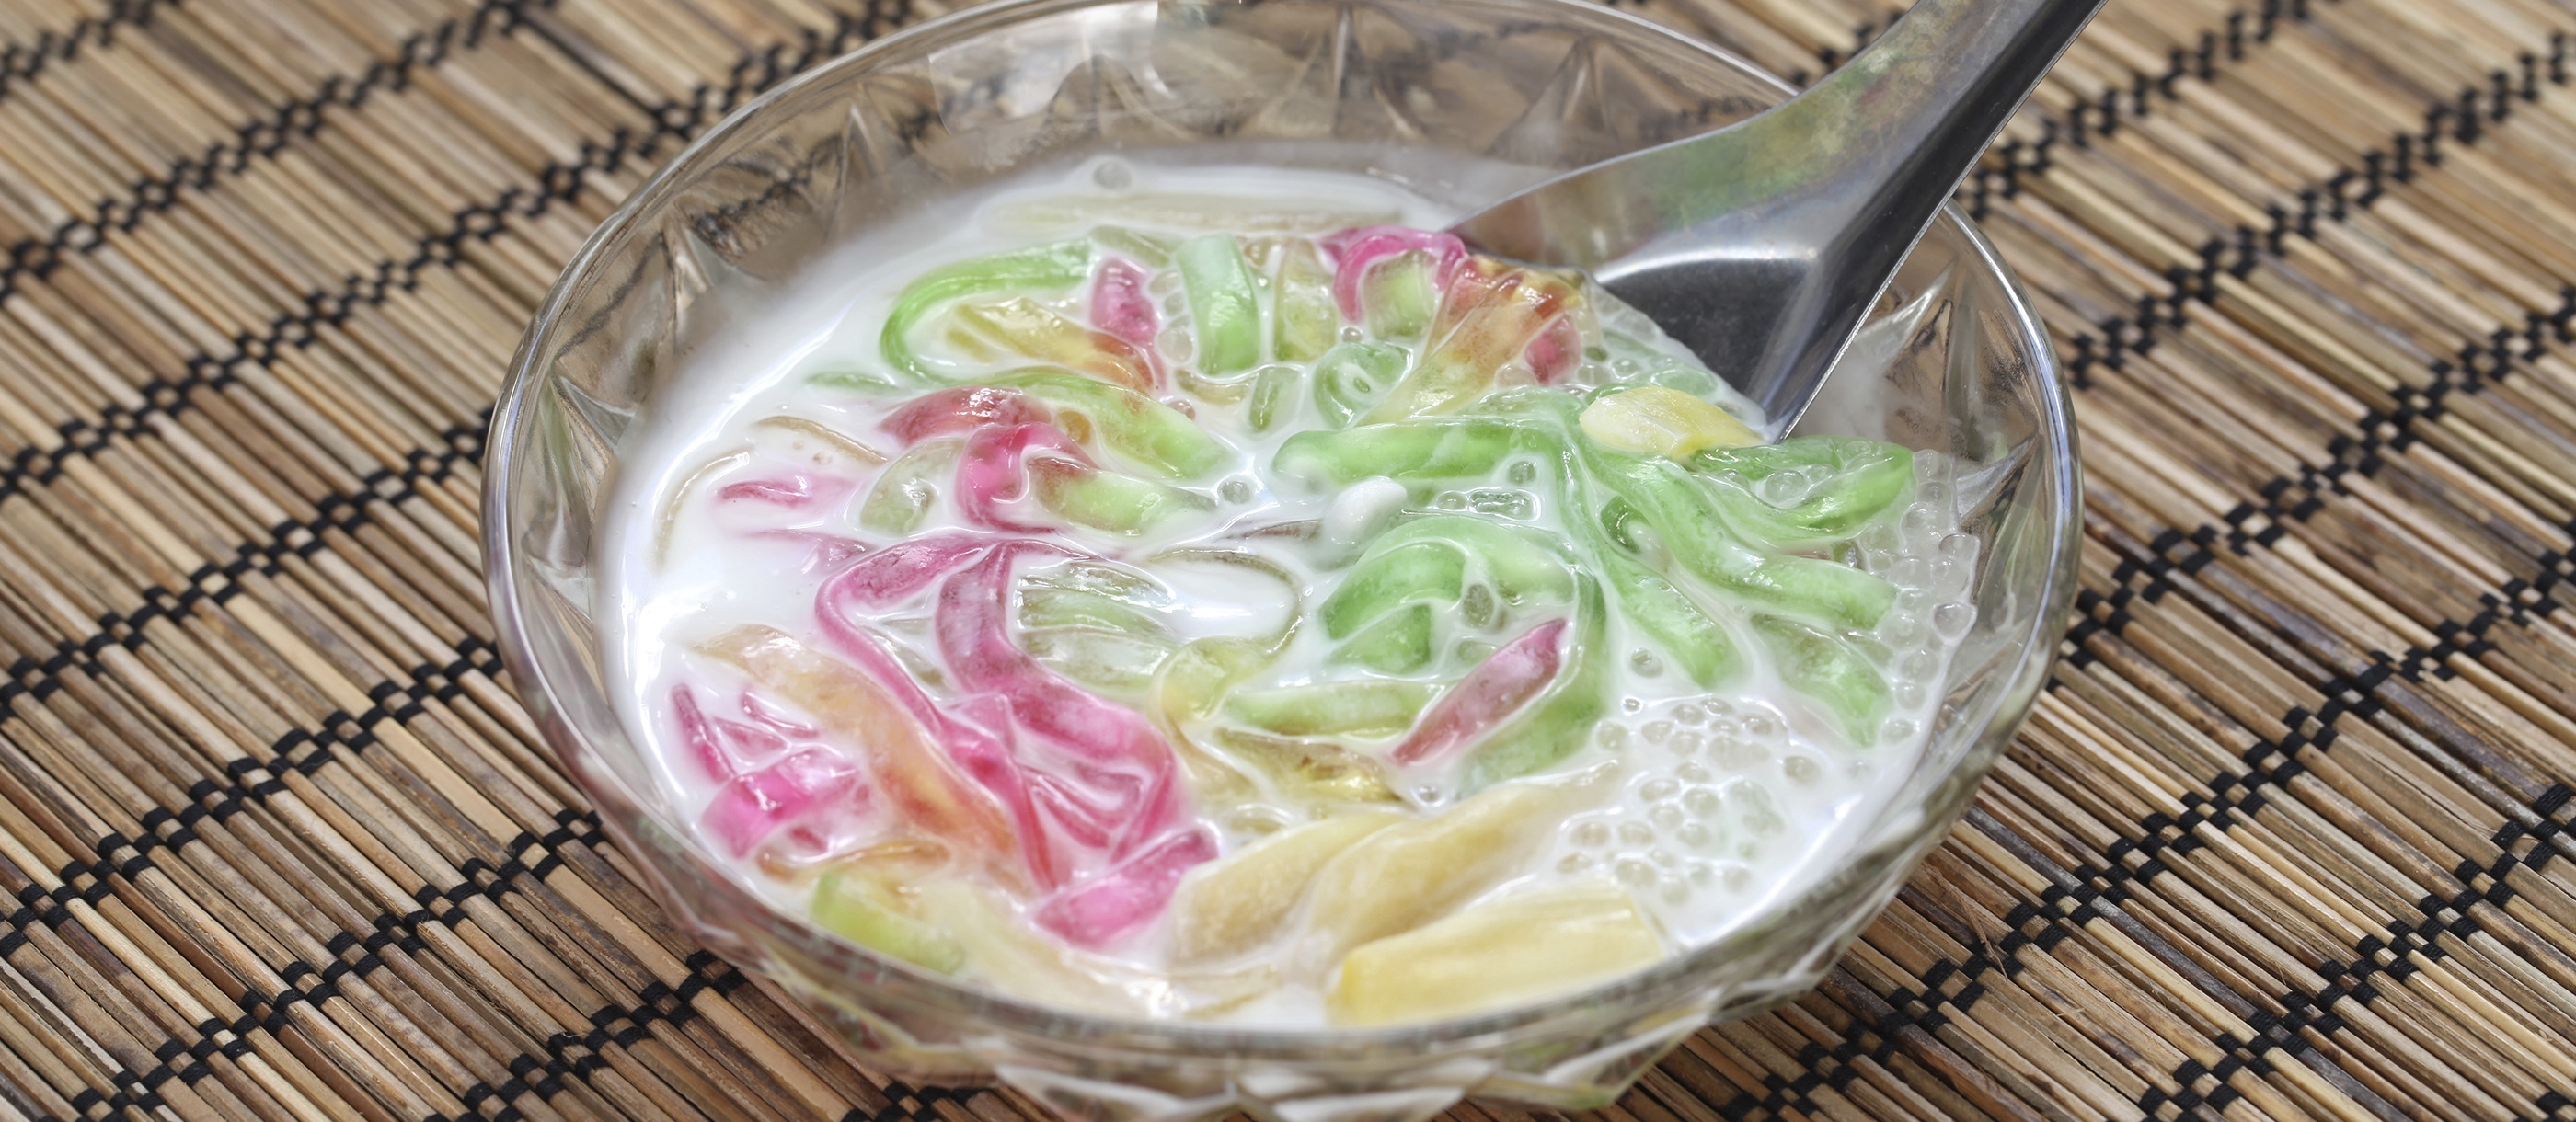 10 Most Popular Thai Desserts - TasteAtlas